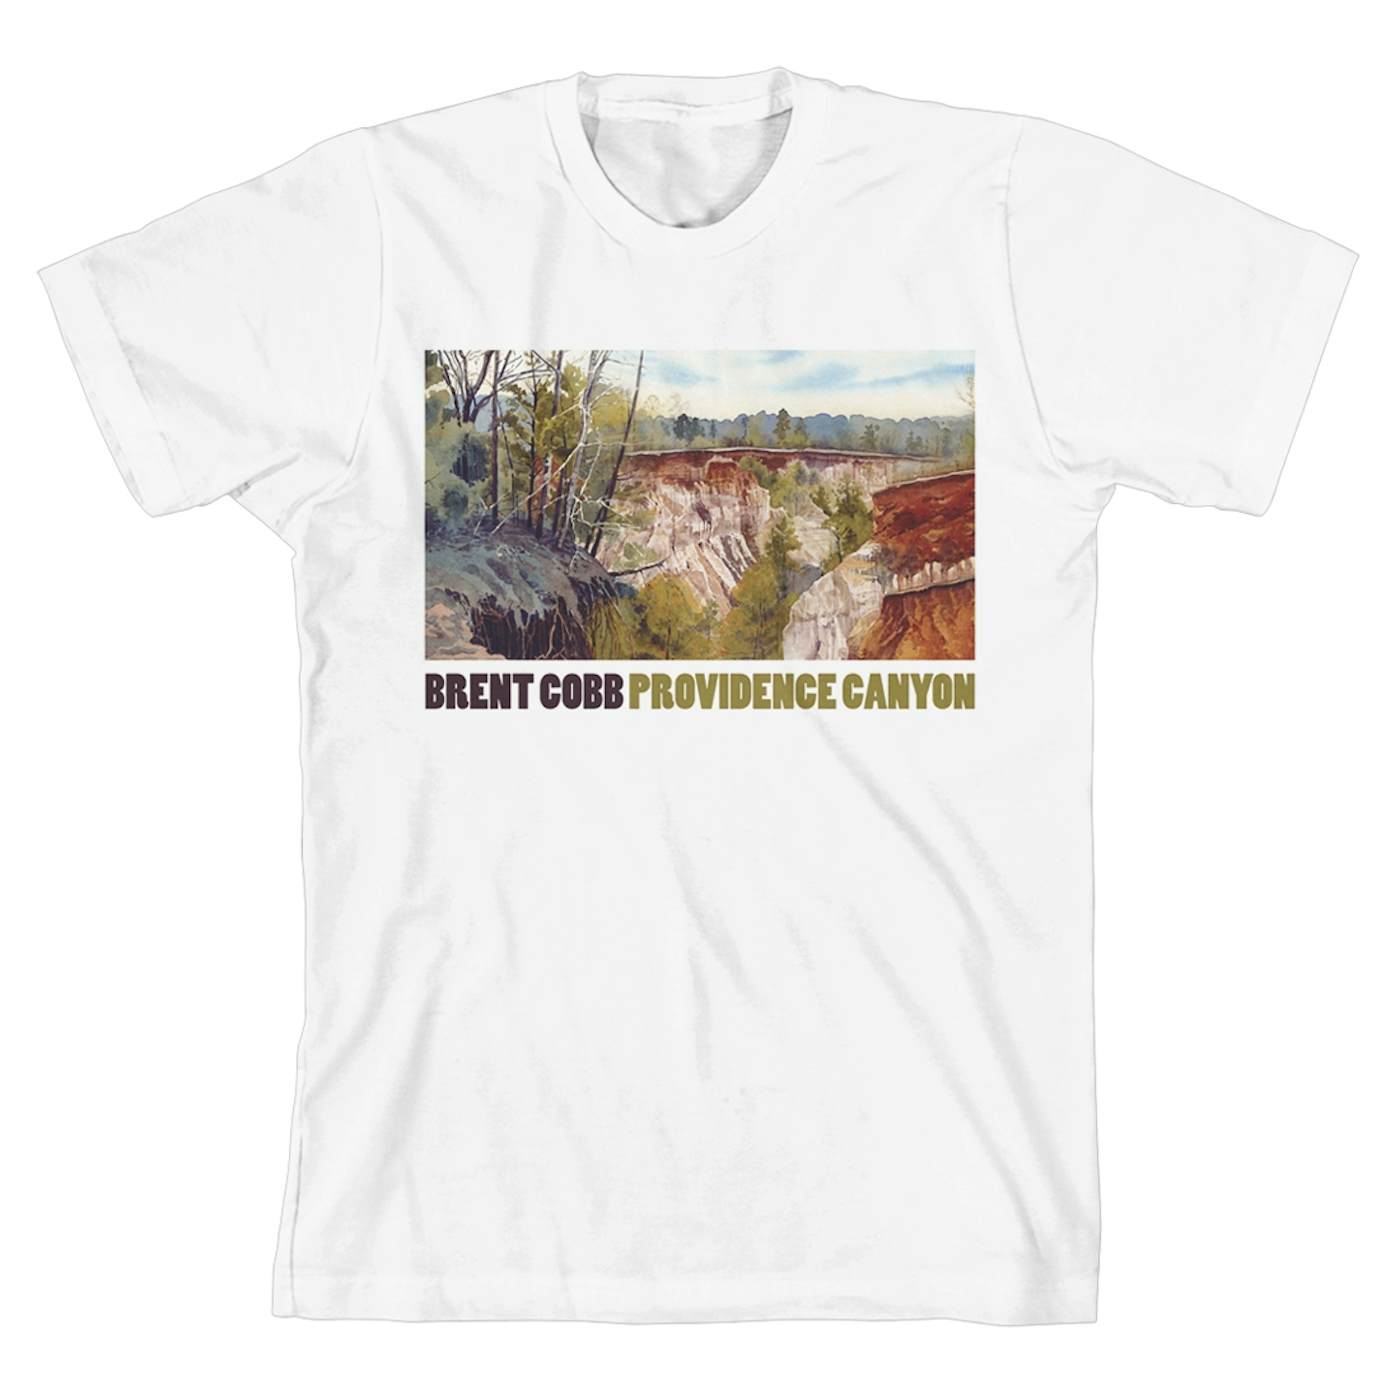 Brent Cobb Providence Canyon T-Shirt